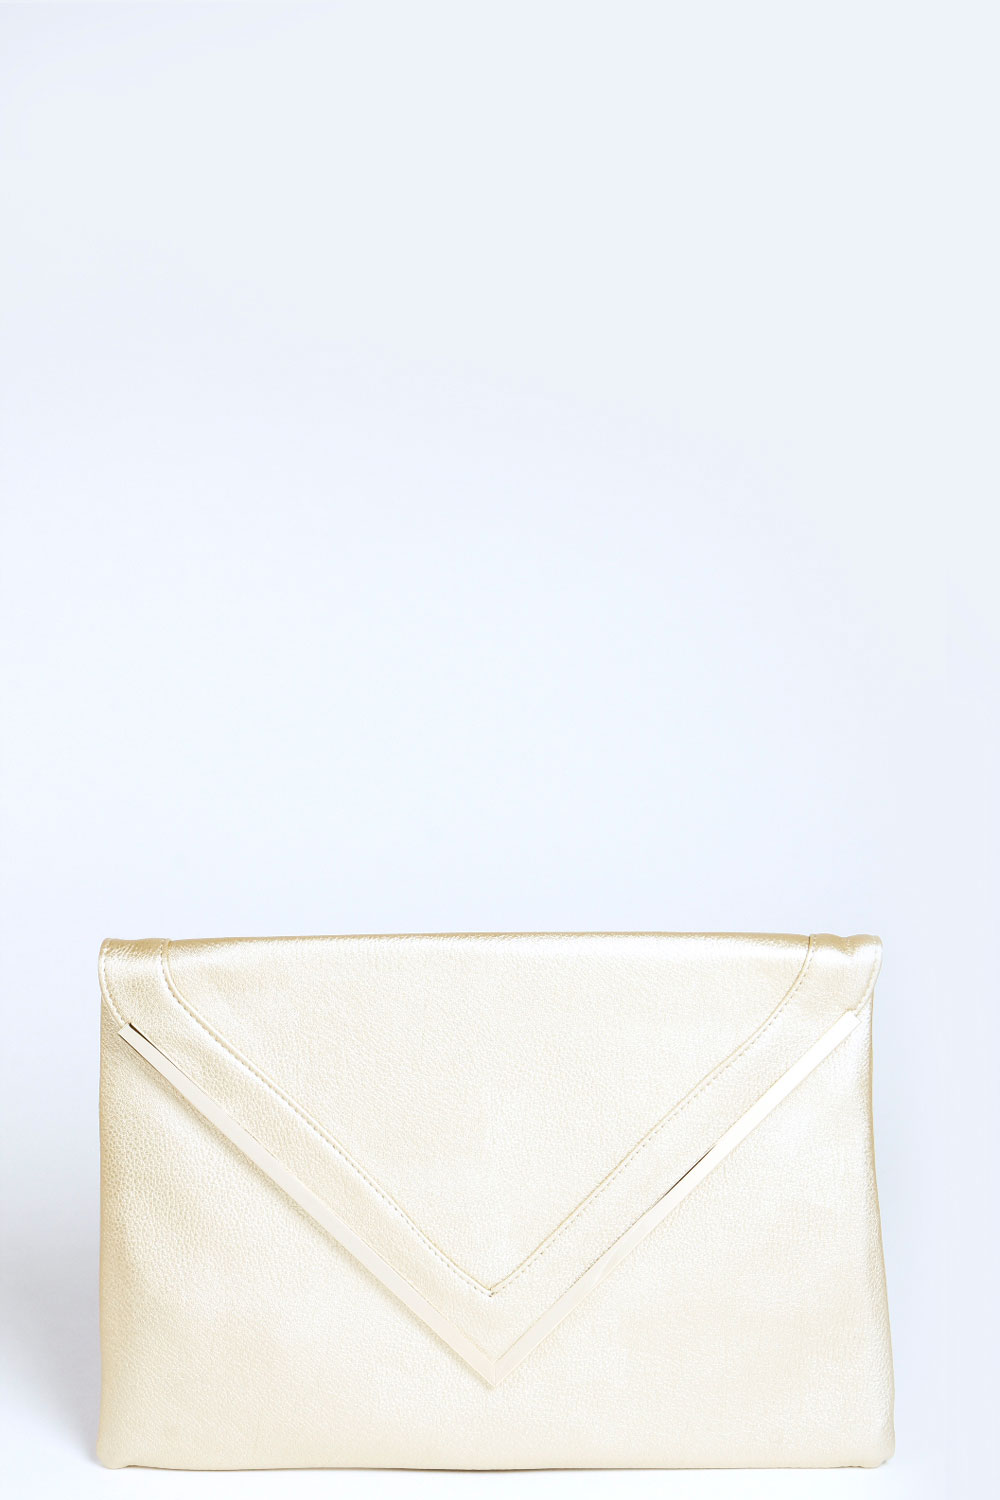 boohoo Leah Oversized Envelope Clutch Bag - gold